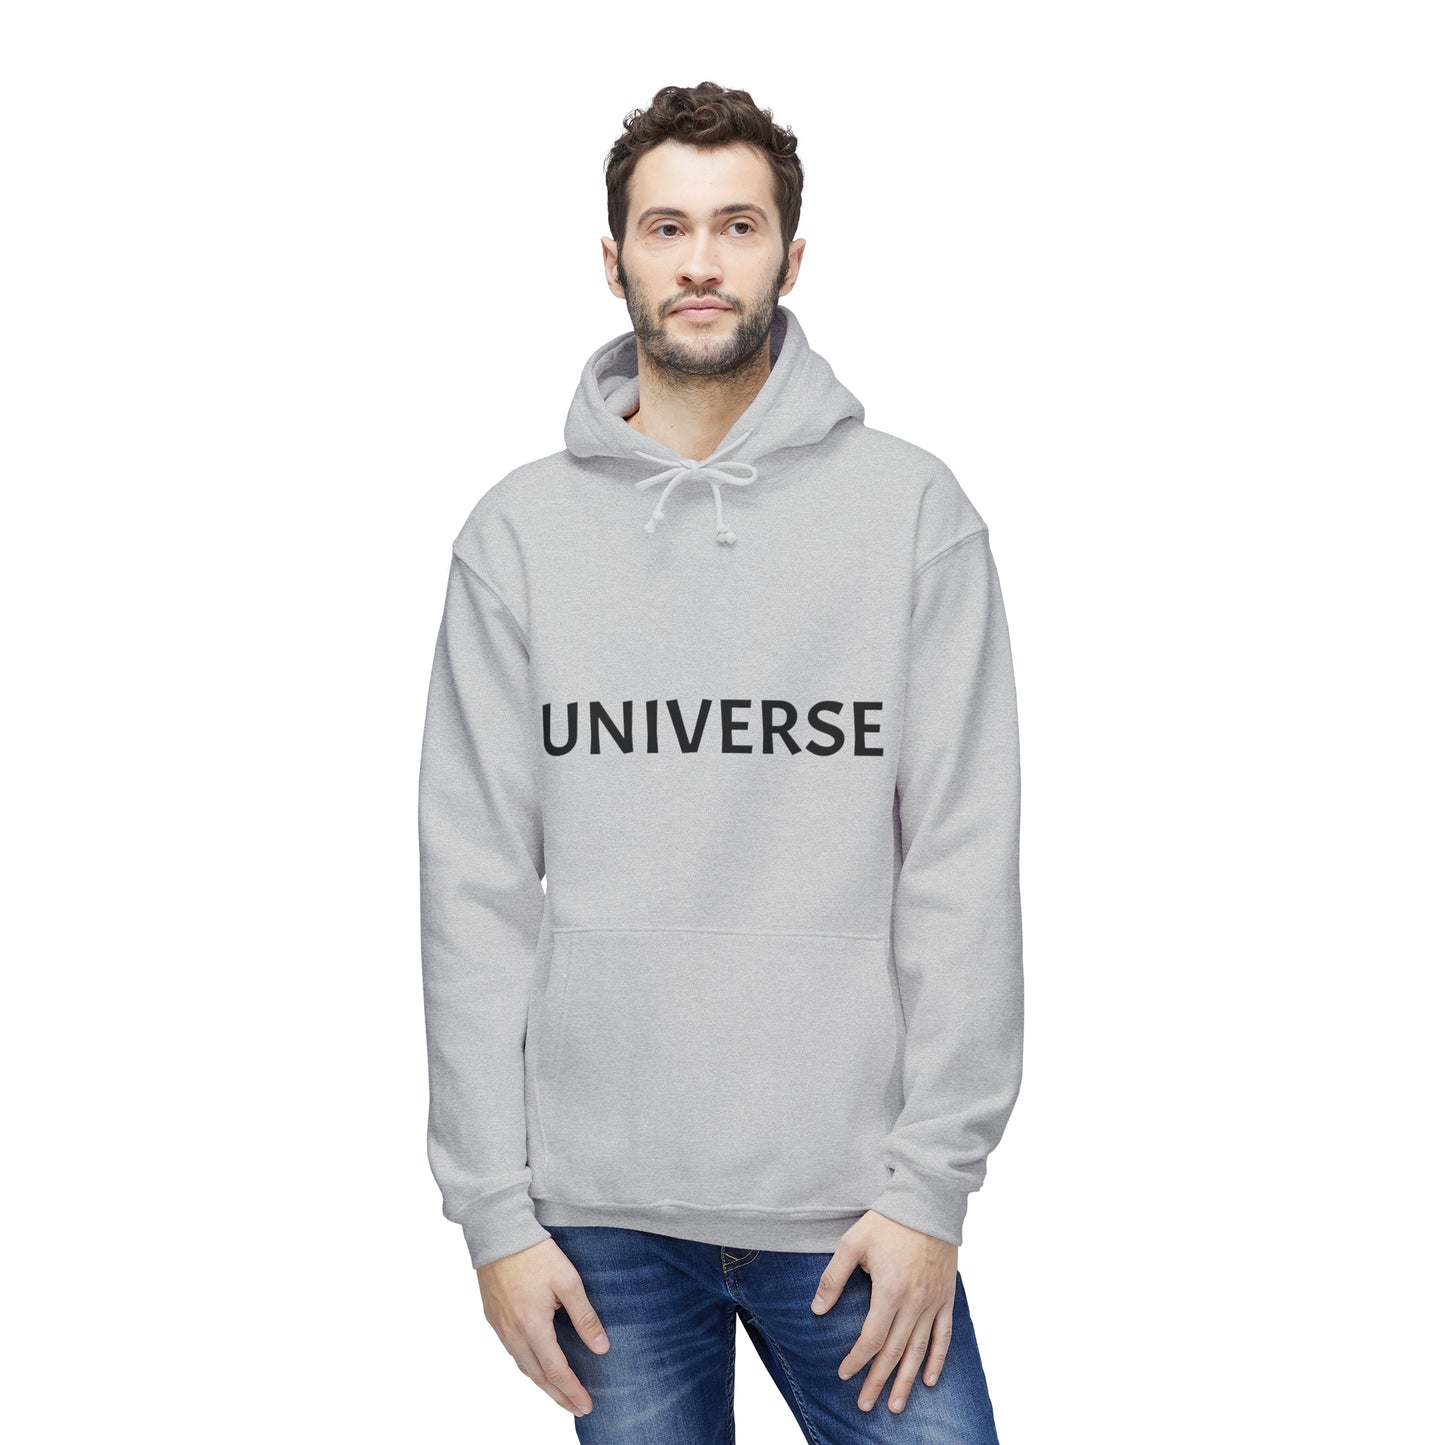 Unisex Hooded Sweatshirt, Made in US